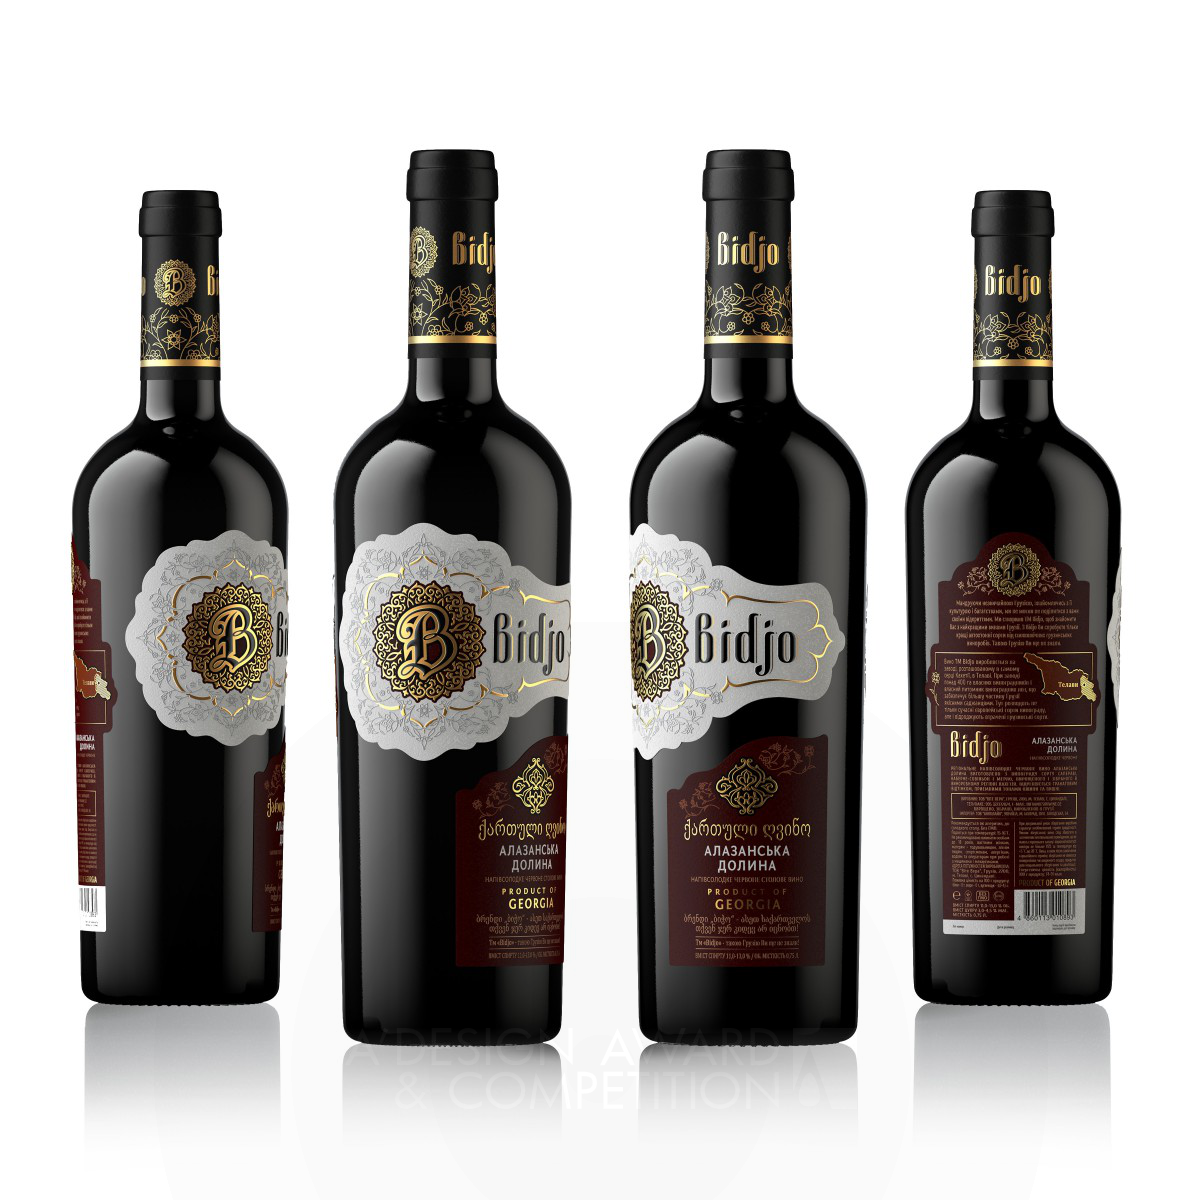 Bidjo Georgian Wine Wines Label by Valerii Sumilov Bronze Packaging Design Award Winner 2019 